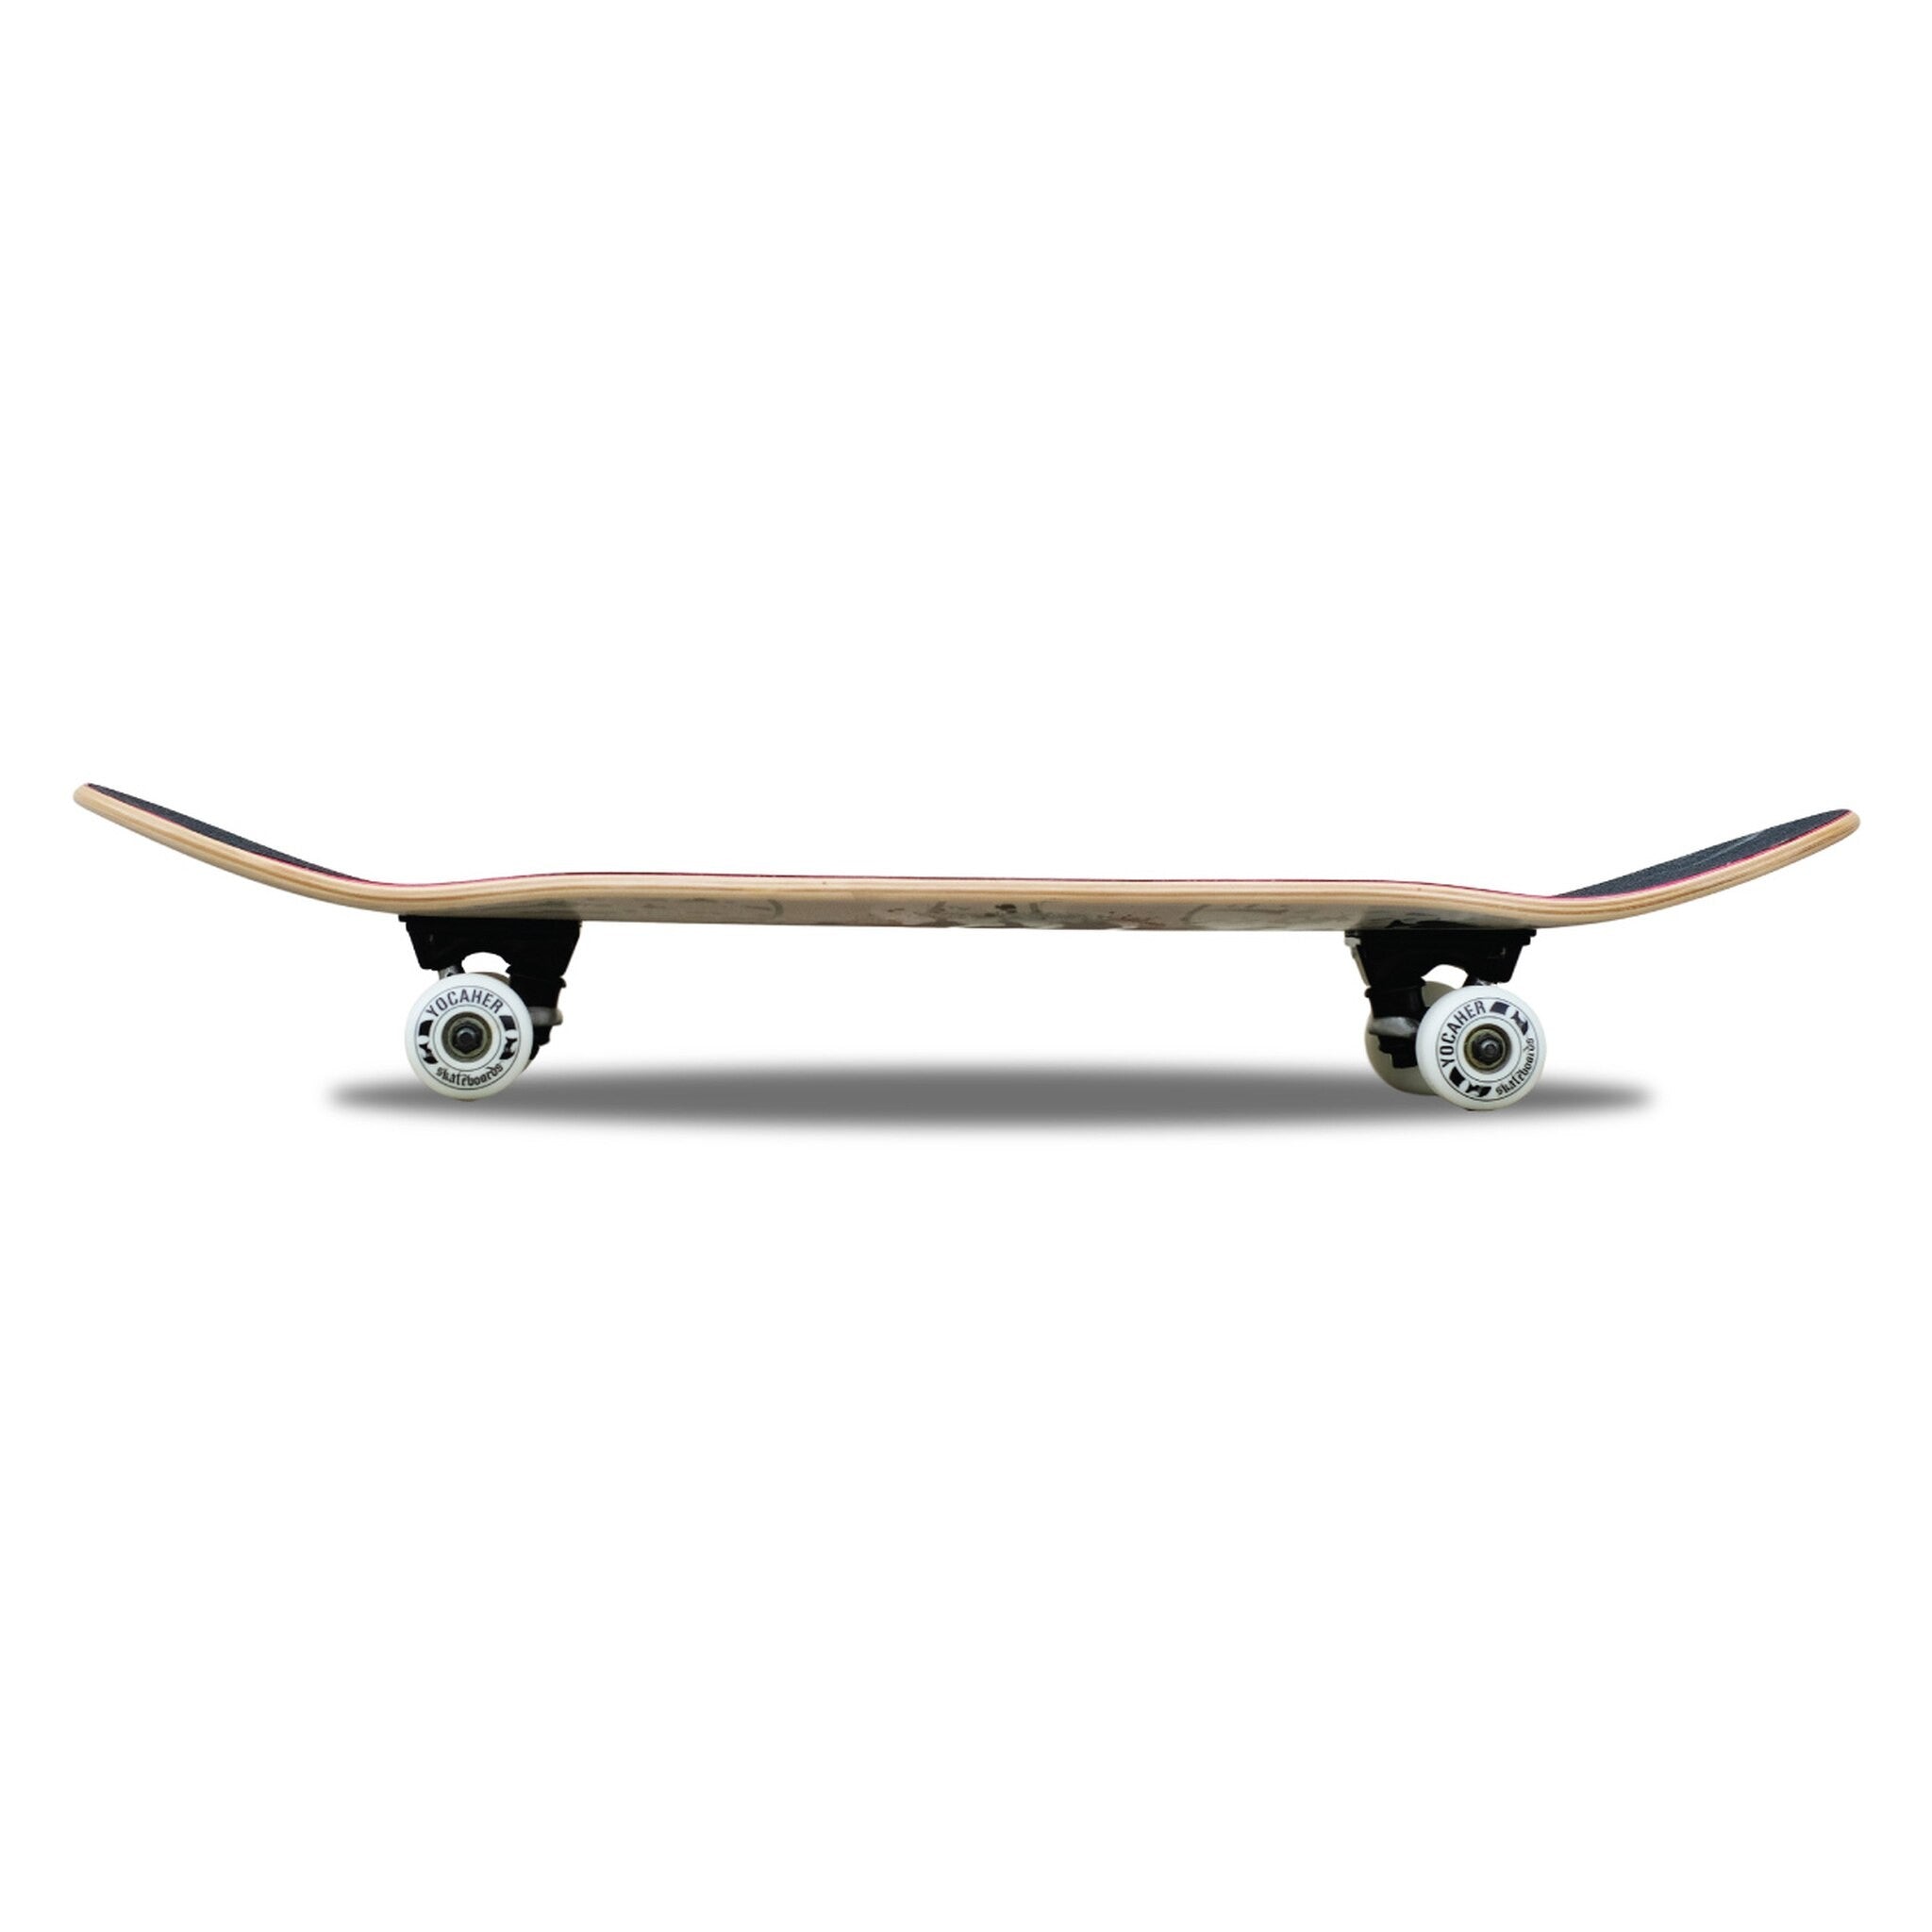 YOCAHER Snikt - Street Skateboard - Tabla completa